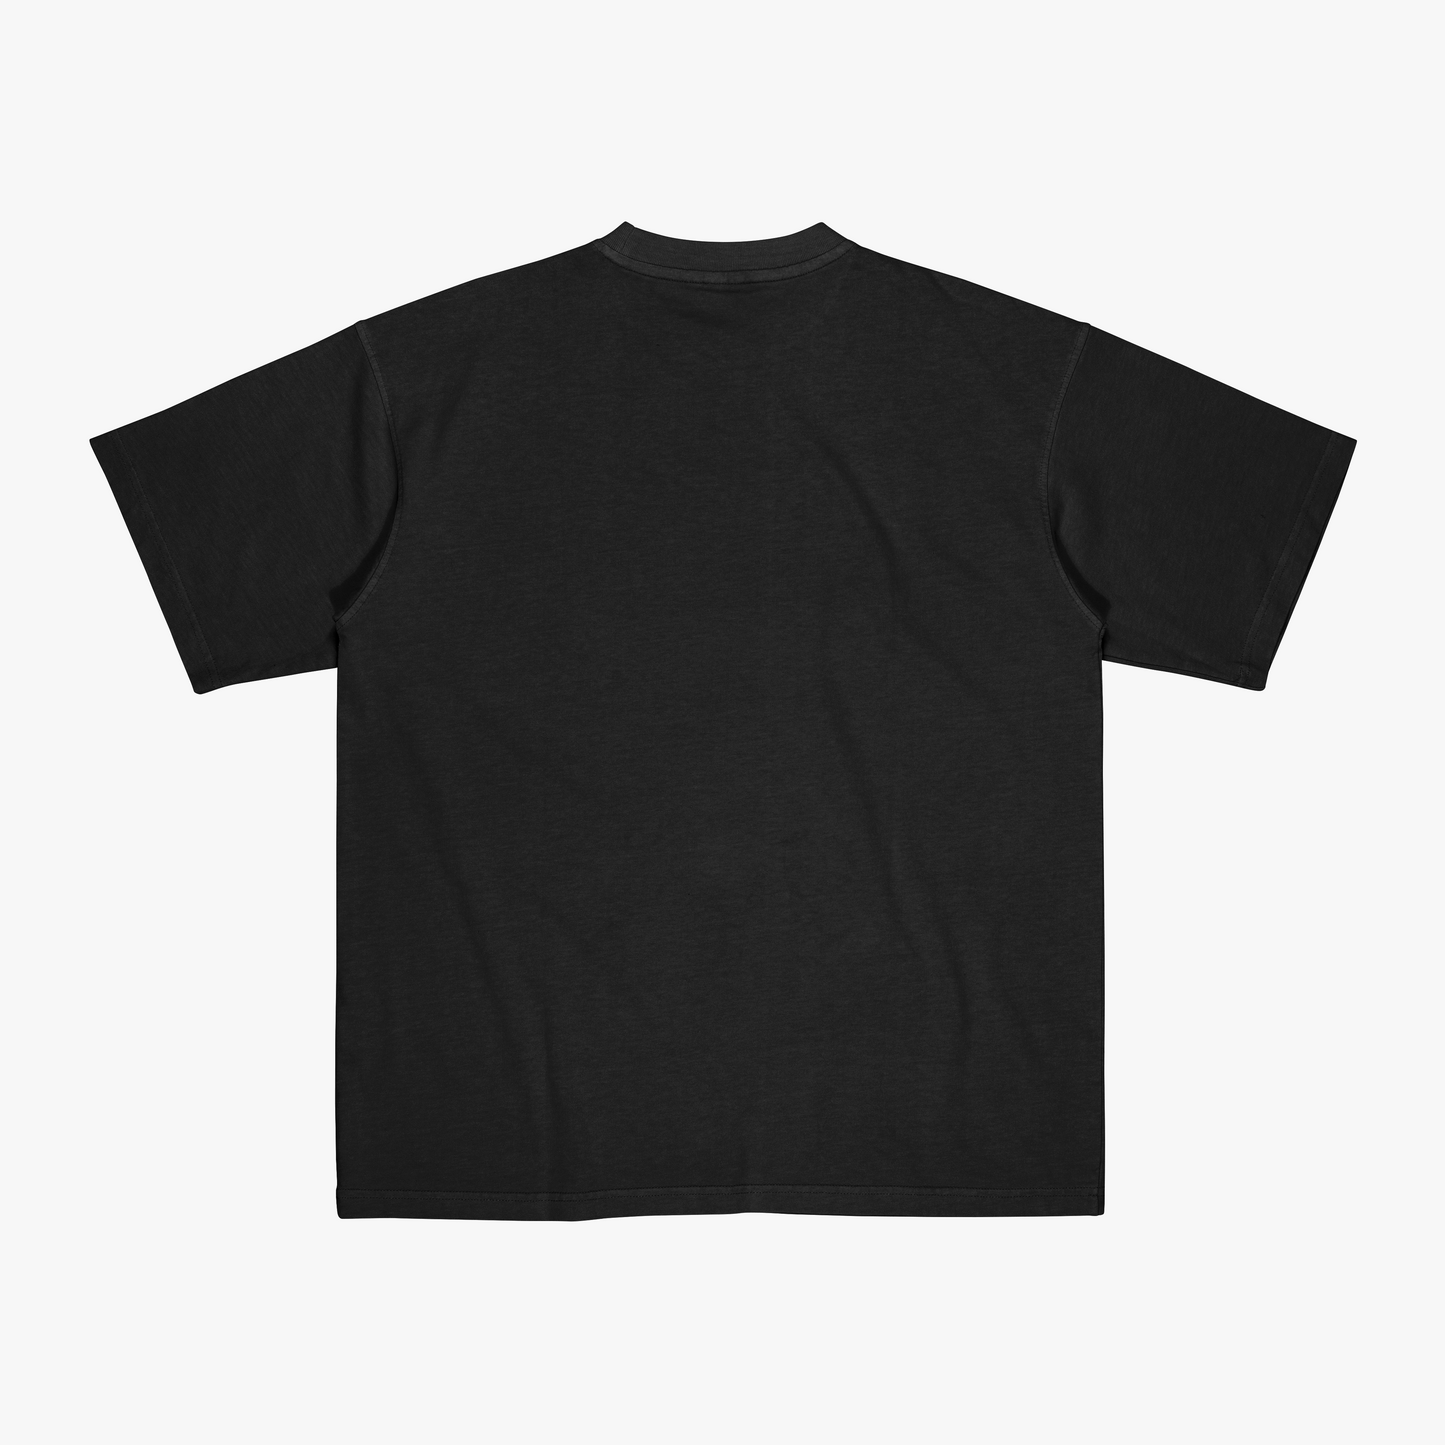 FakeButReal 'Beast' Black Oversize T-Shirt